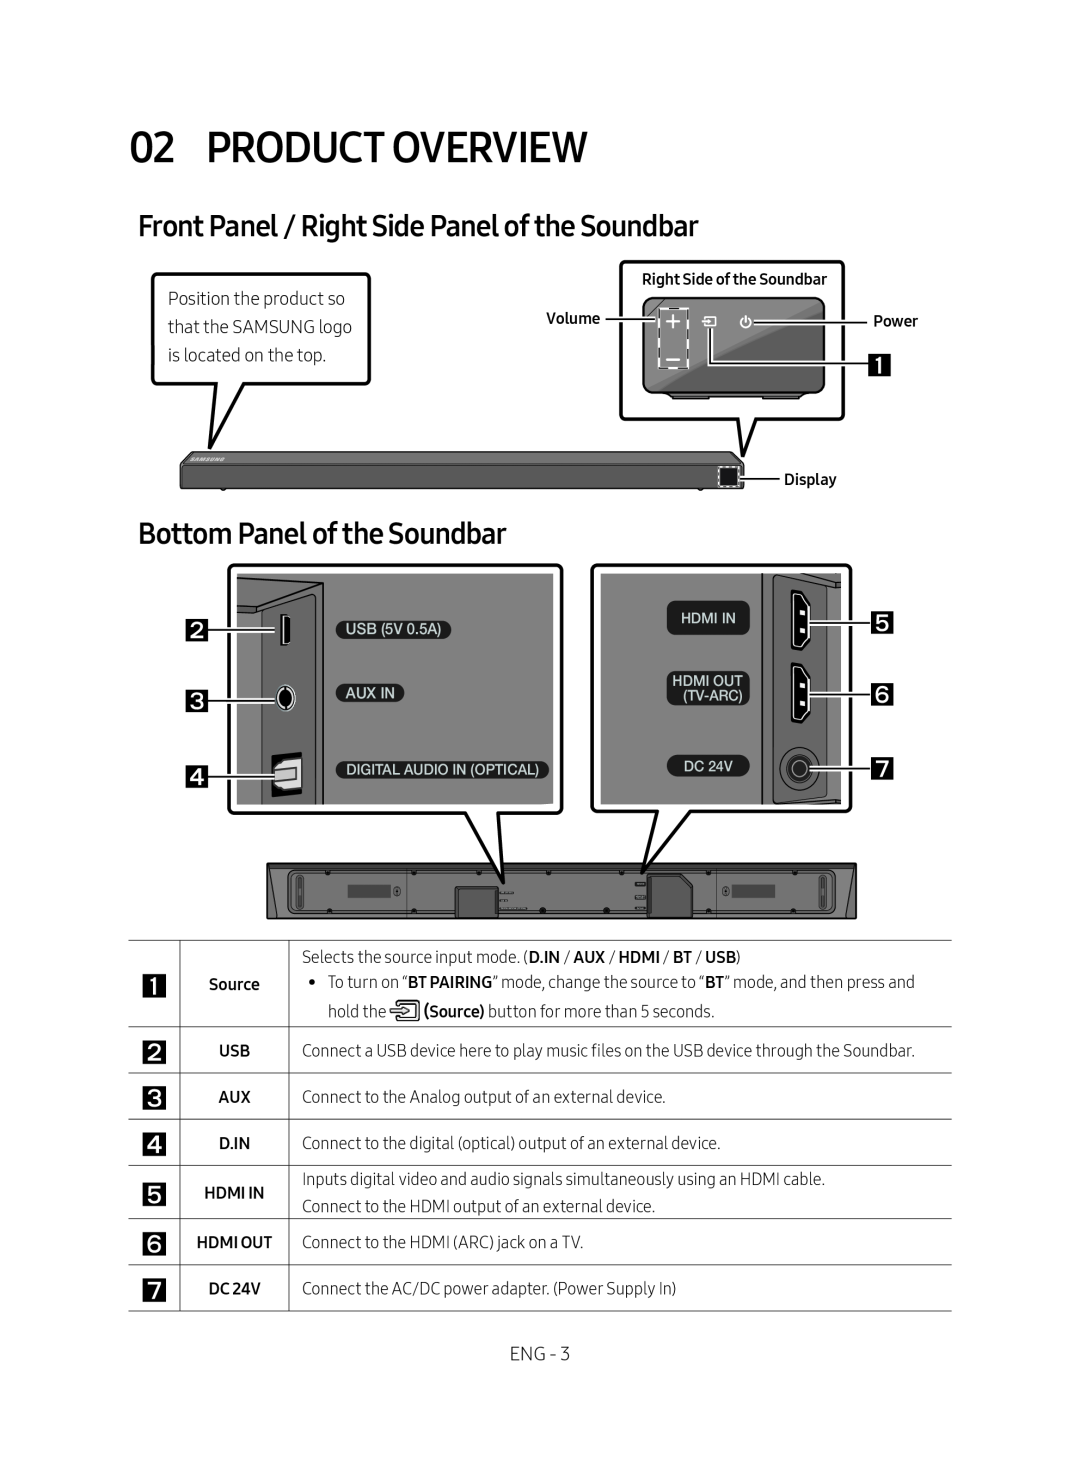 Front Panel / Right Side Panel of the Soundbar Standard HW-N650